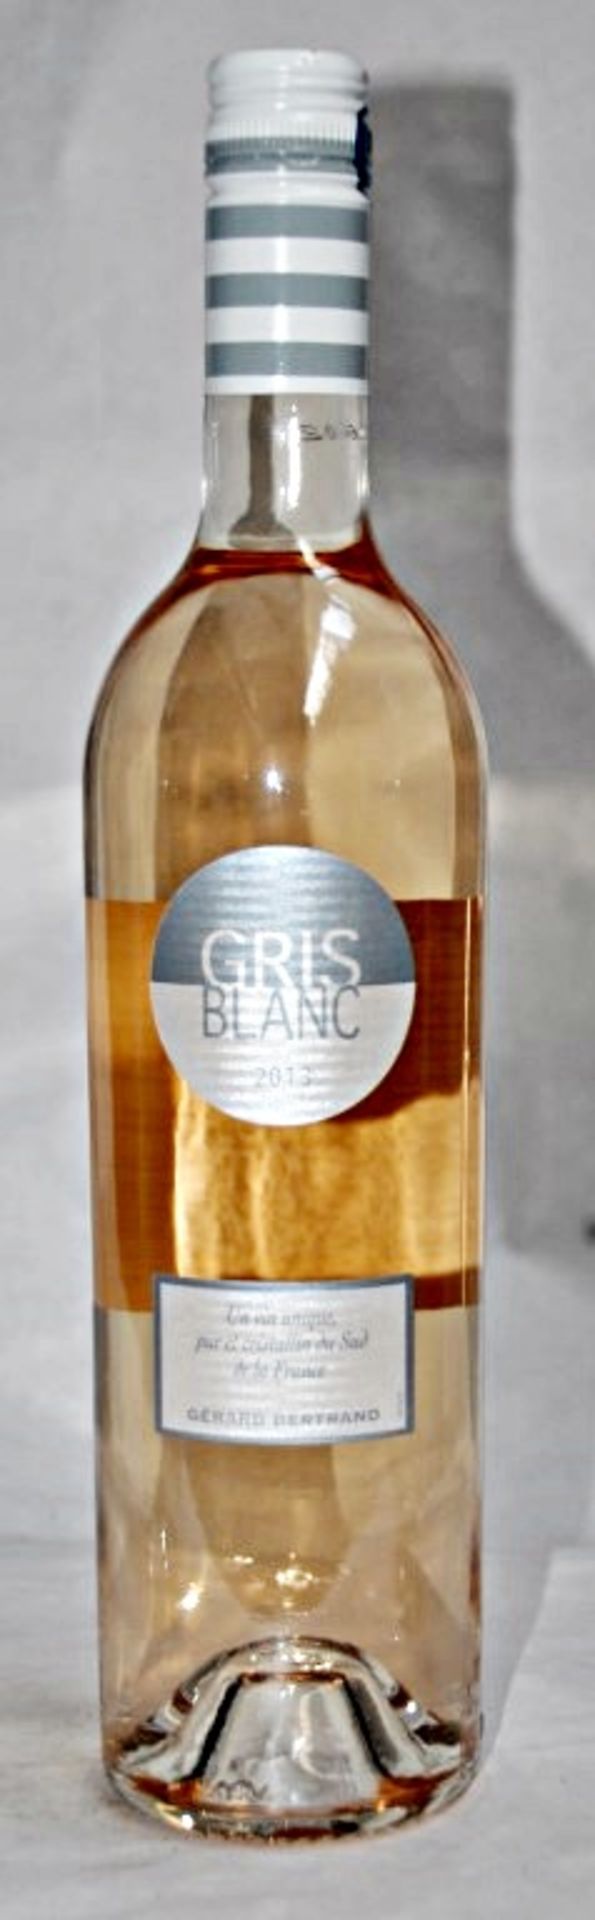 3 x 2013 Gerard Bertrand Gris Blanc, IGP Pays d'Oc, France – 2013 – Bottle Size 75cl - Volume - Image 2 of 4